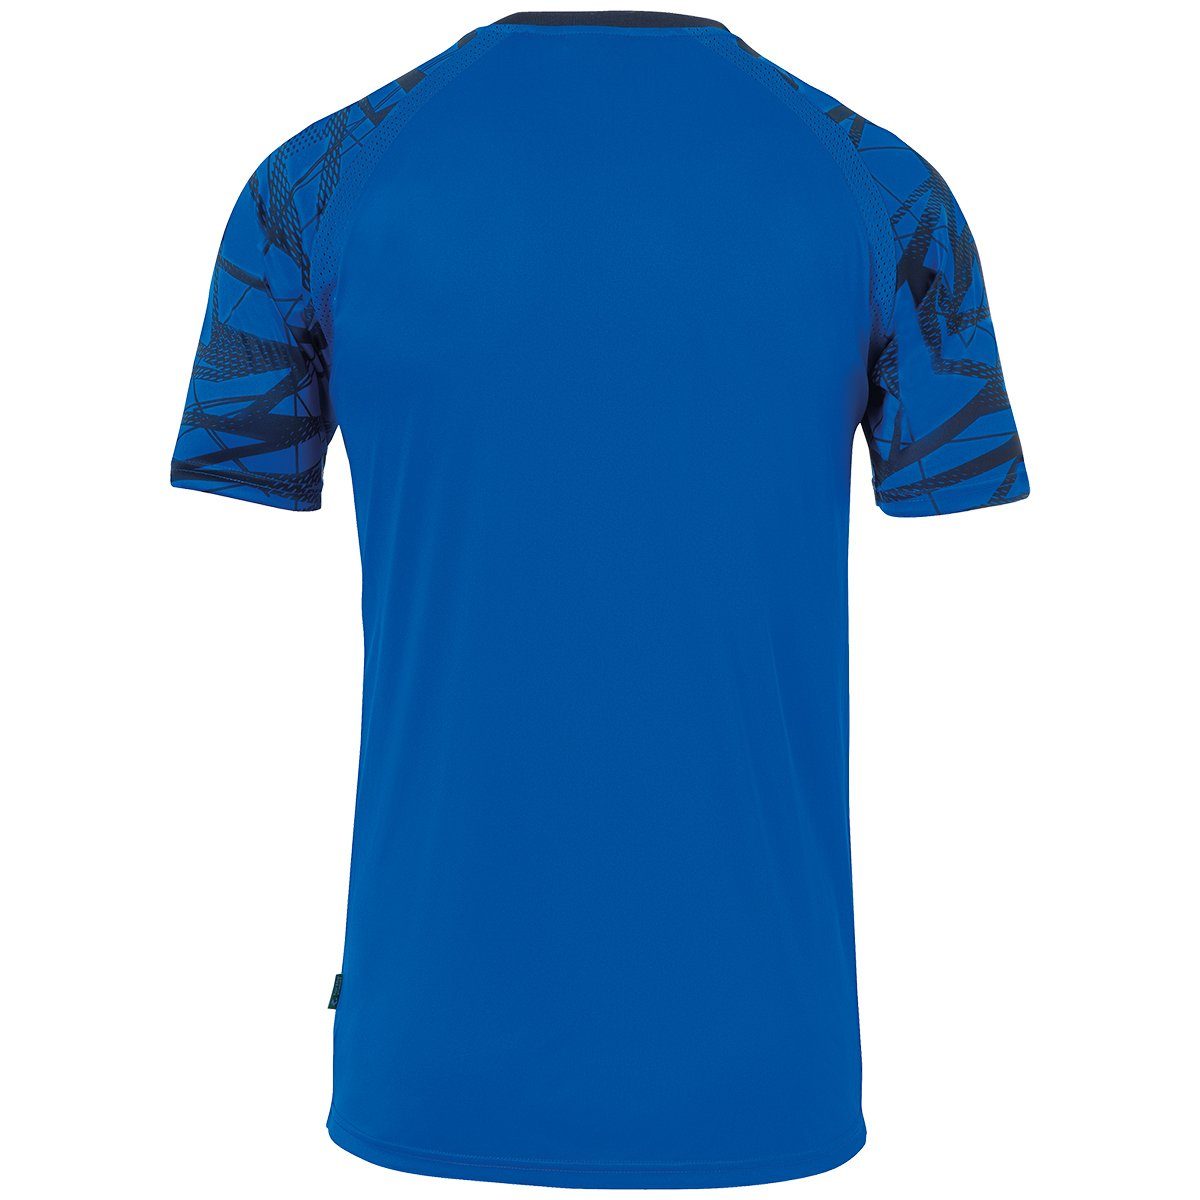 azurblau/marine uhlsport TRIKOT uhlsport Trainingsshirt atmungsaktiv KURZARM 25 GOAL Trainings-T-Shirt